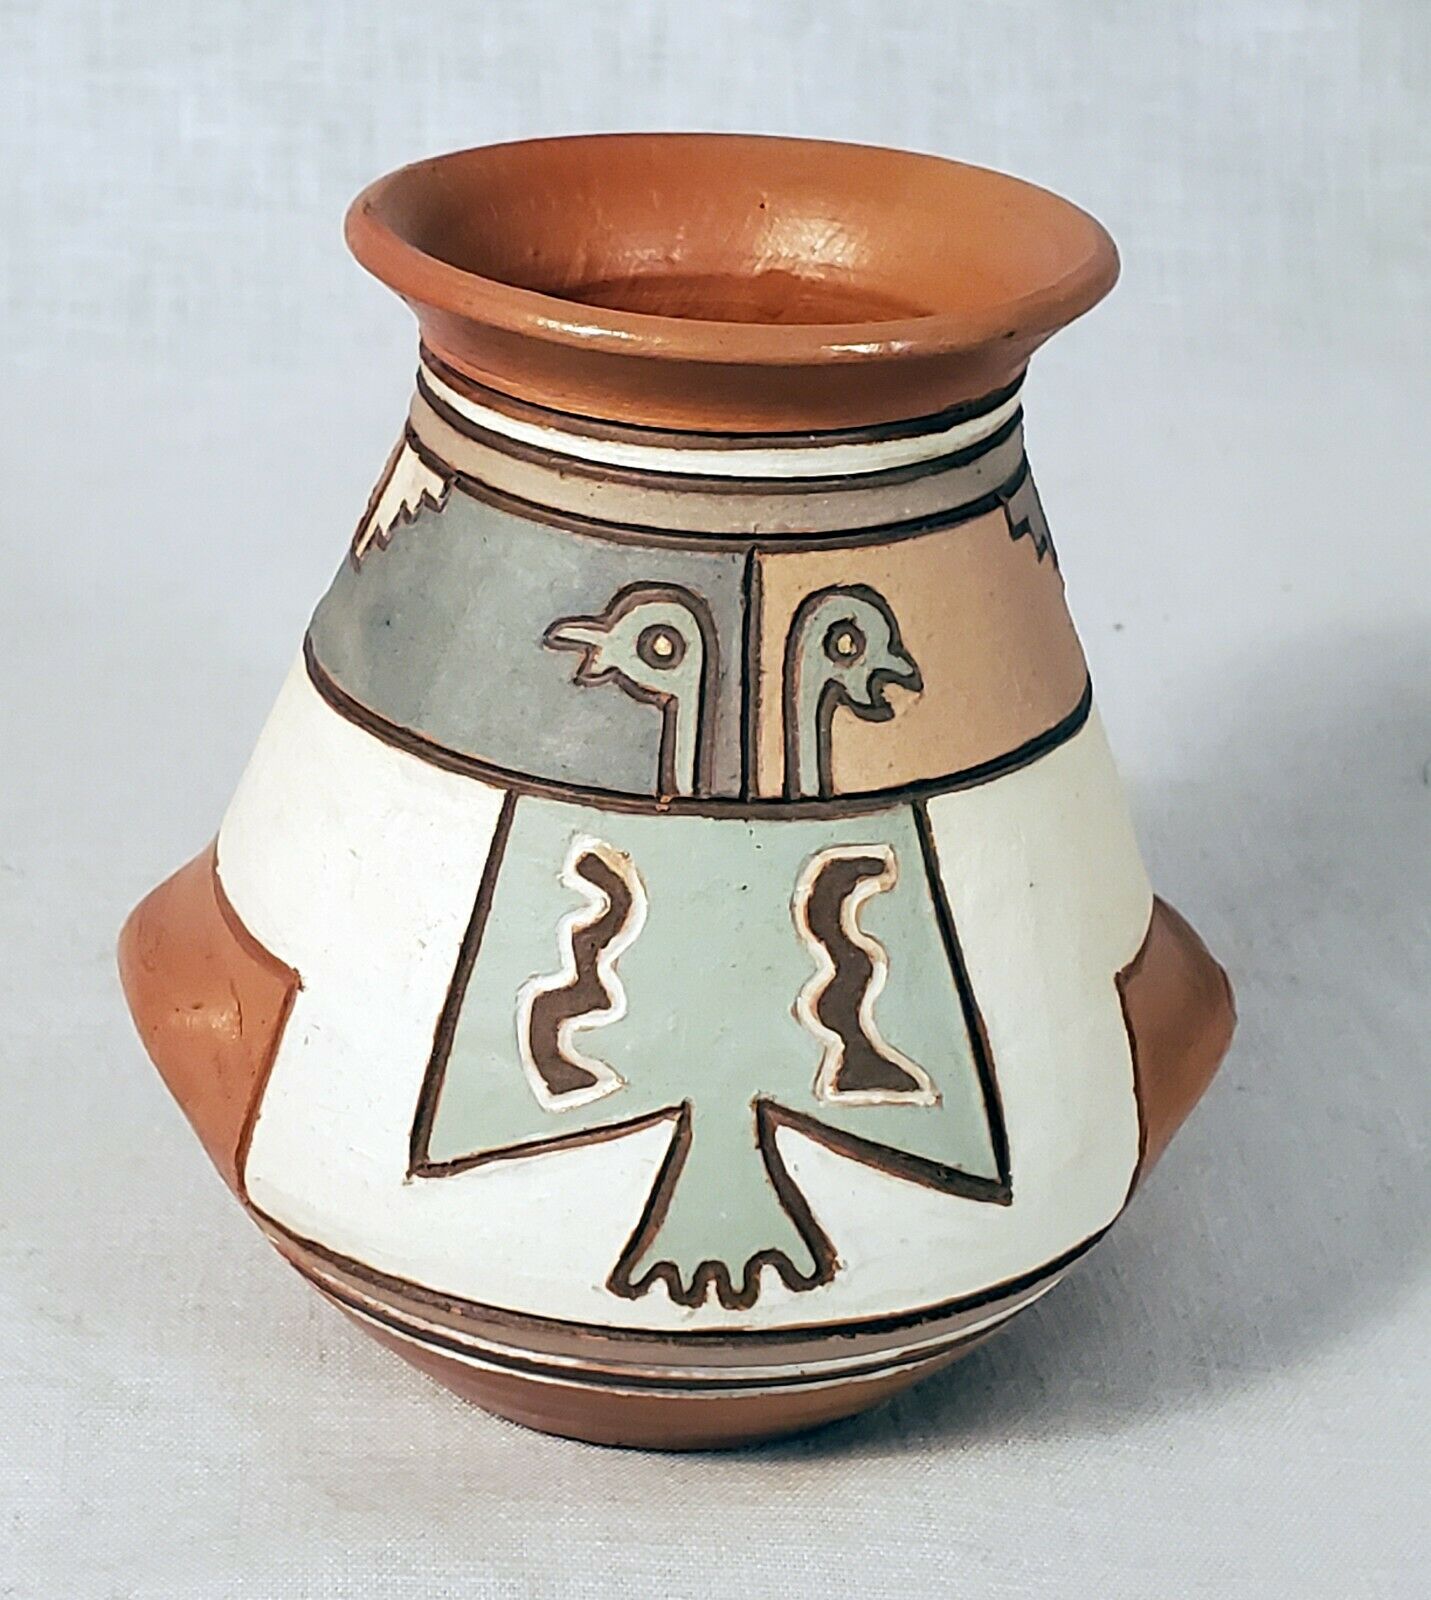 Handmade Signed Terracotta Vase. Made in La Rioja, Argentina by Maidama Daniel